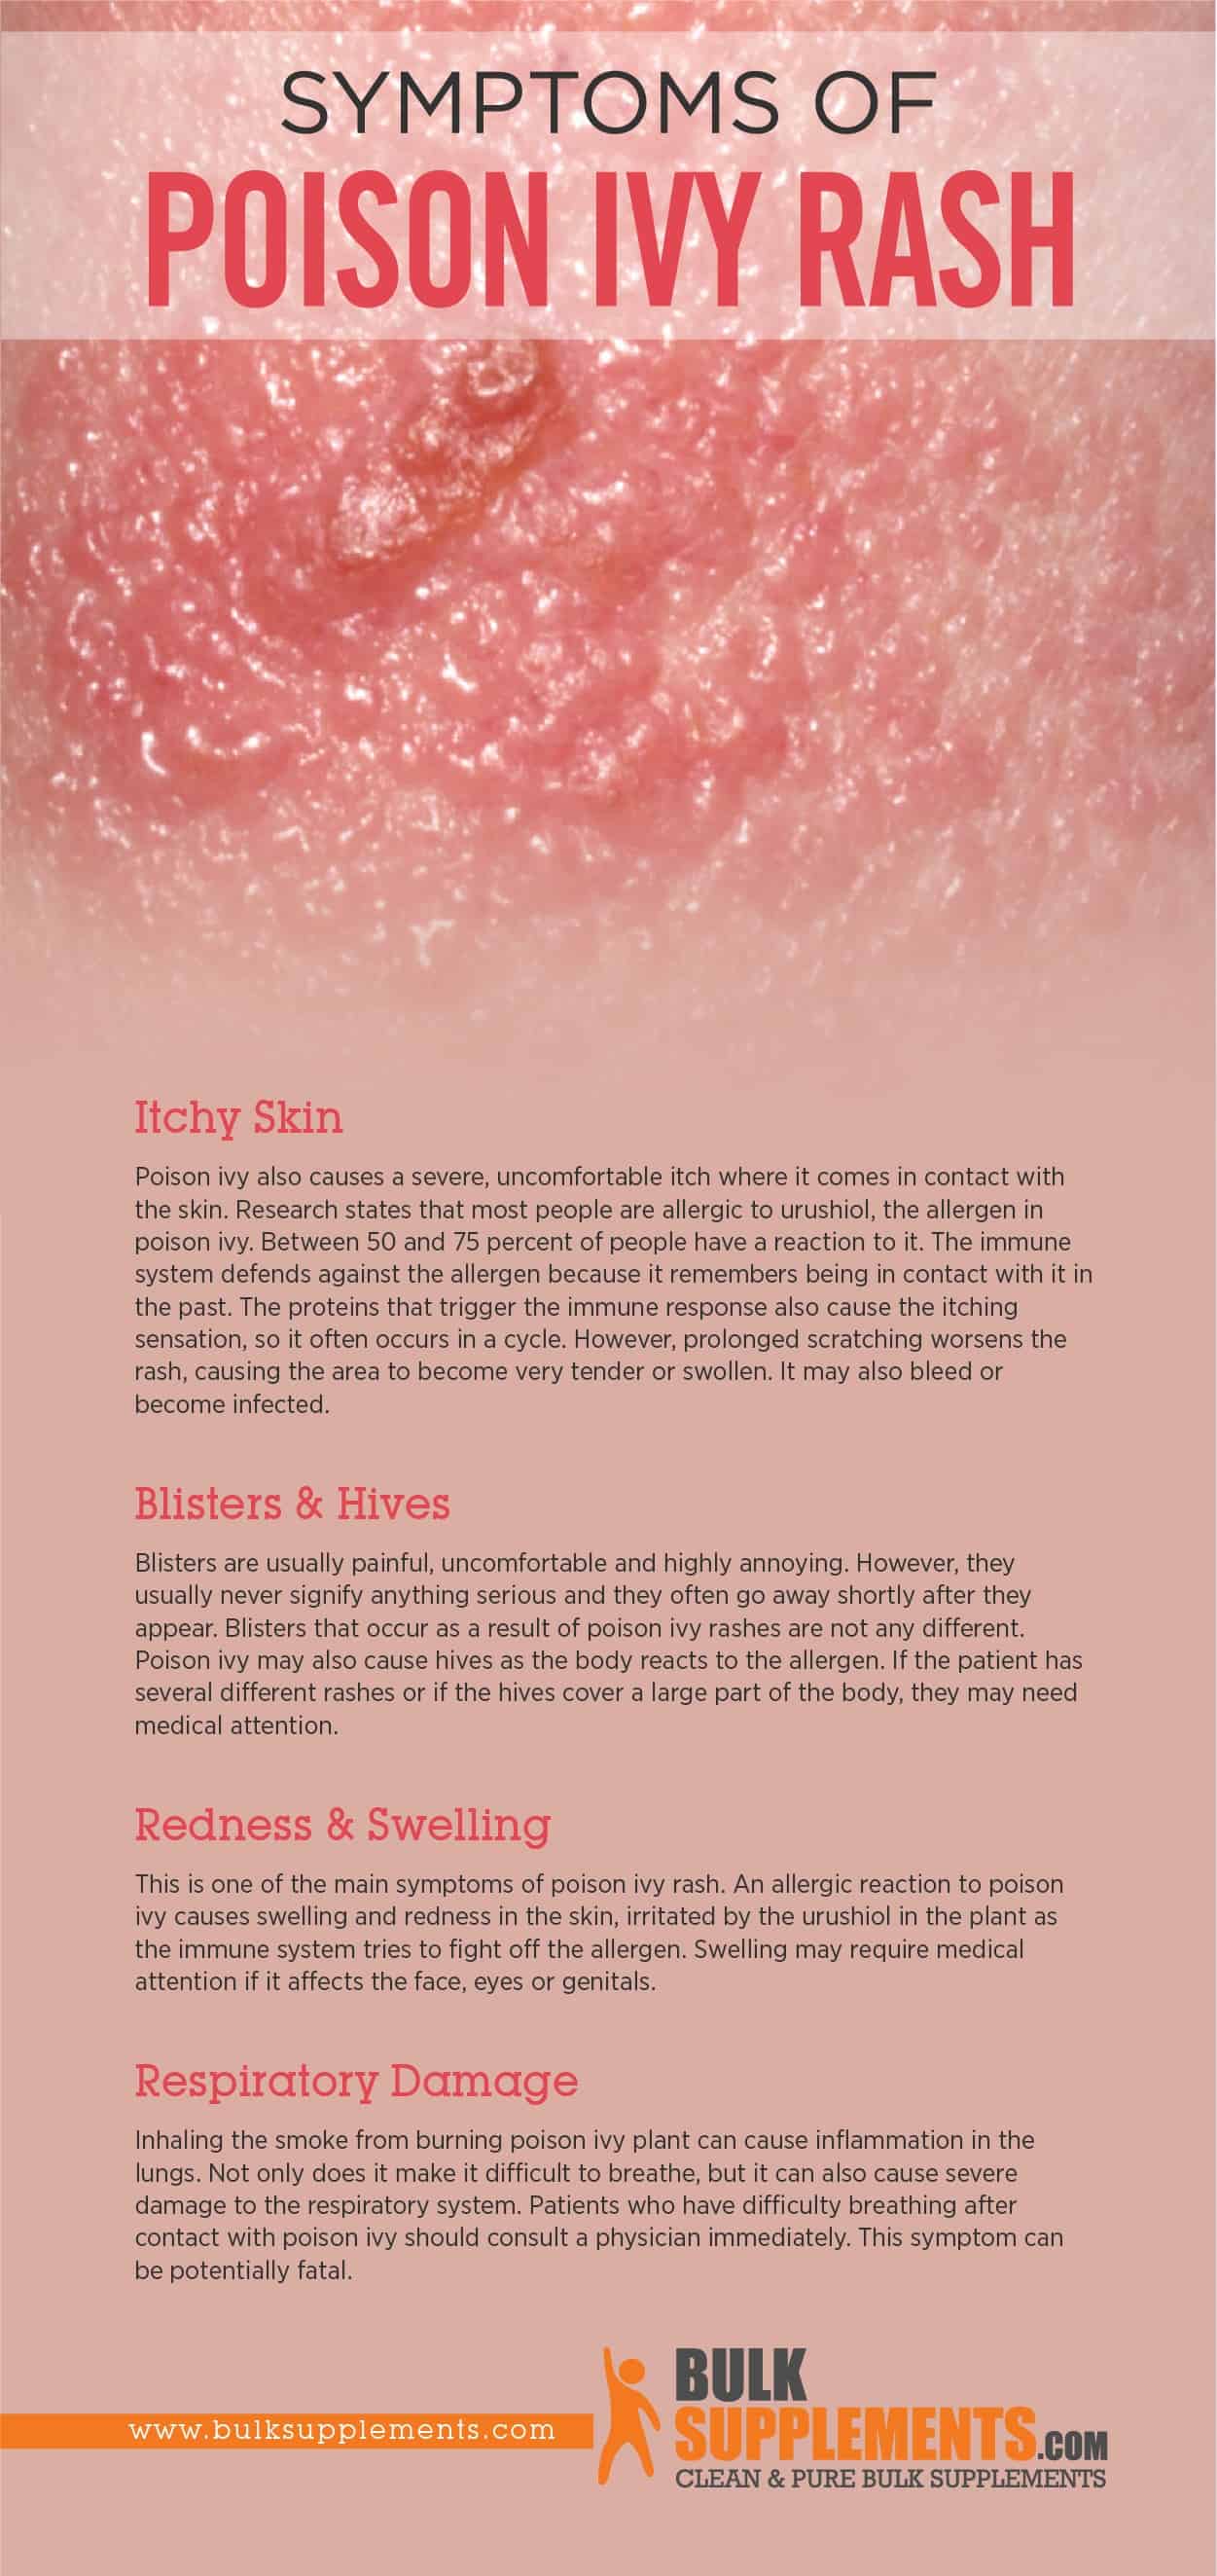 Symptoms of Poison Ivy Rash